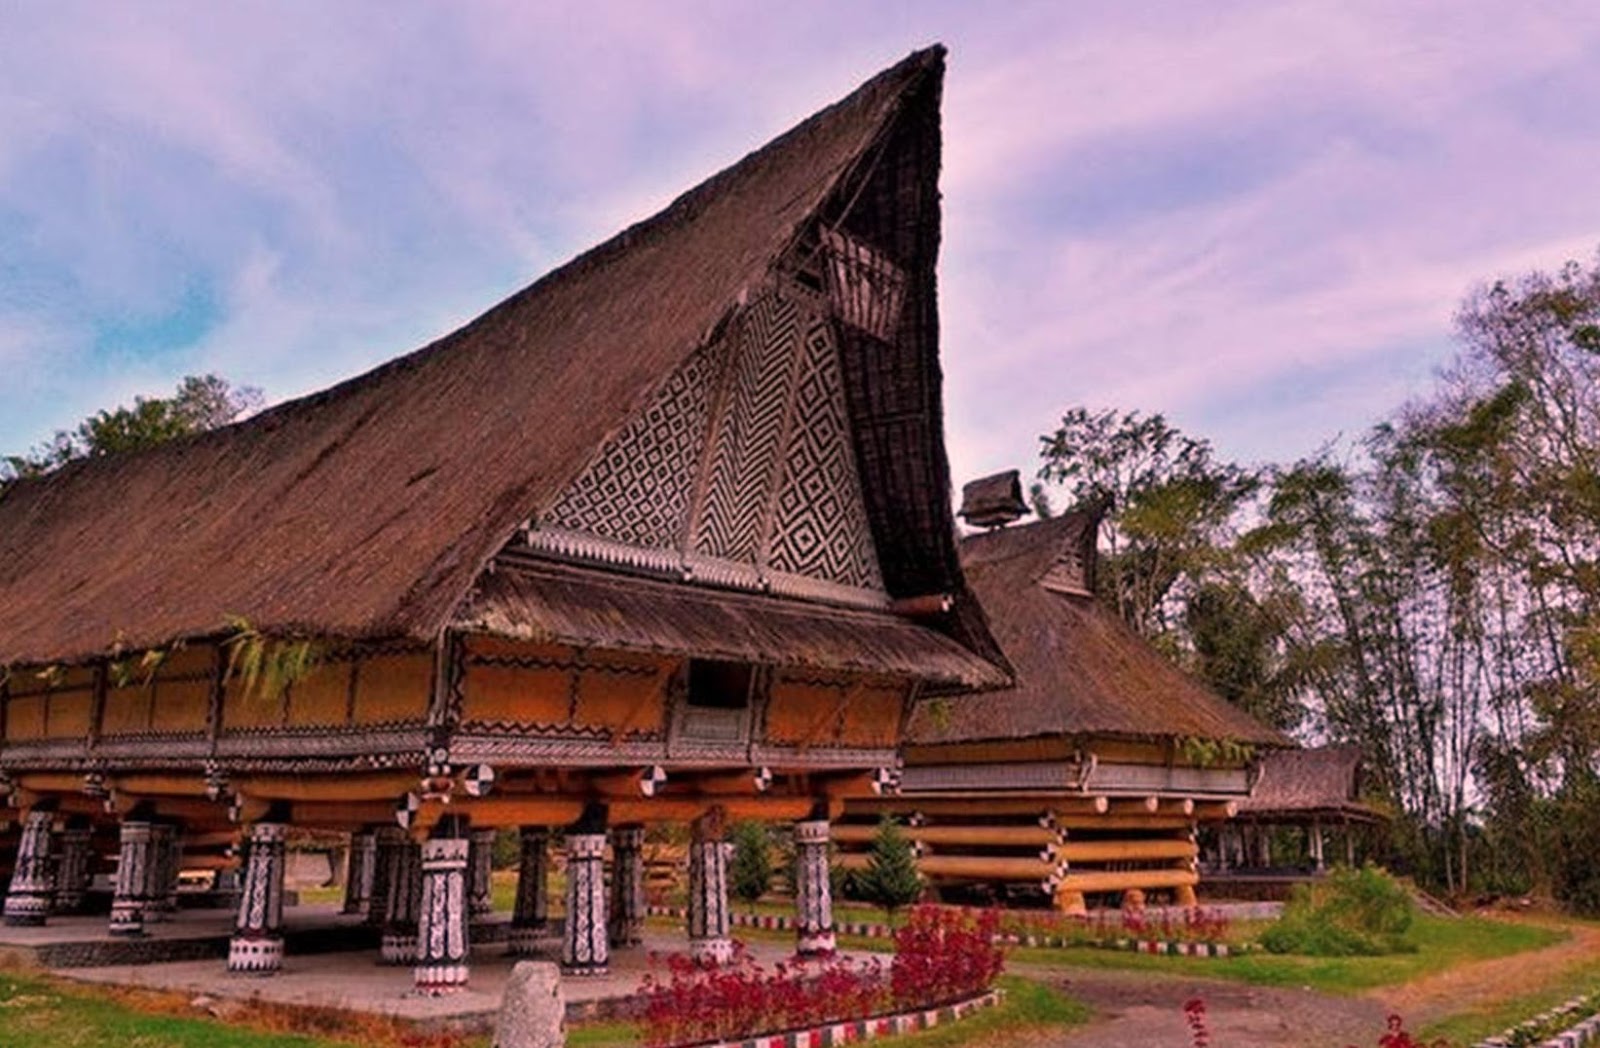 Inilah 10 Rumah Adat Sumatera Utara dari Berbagai Suku - Pariwisata Sumut